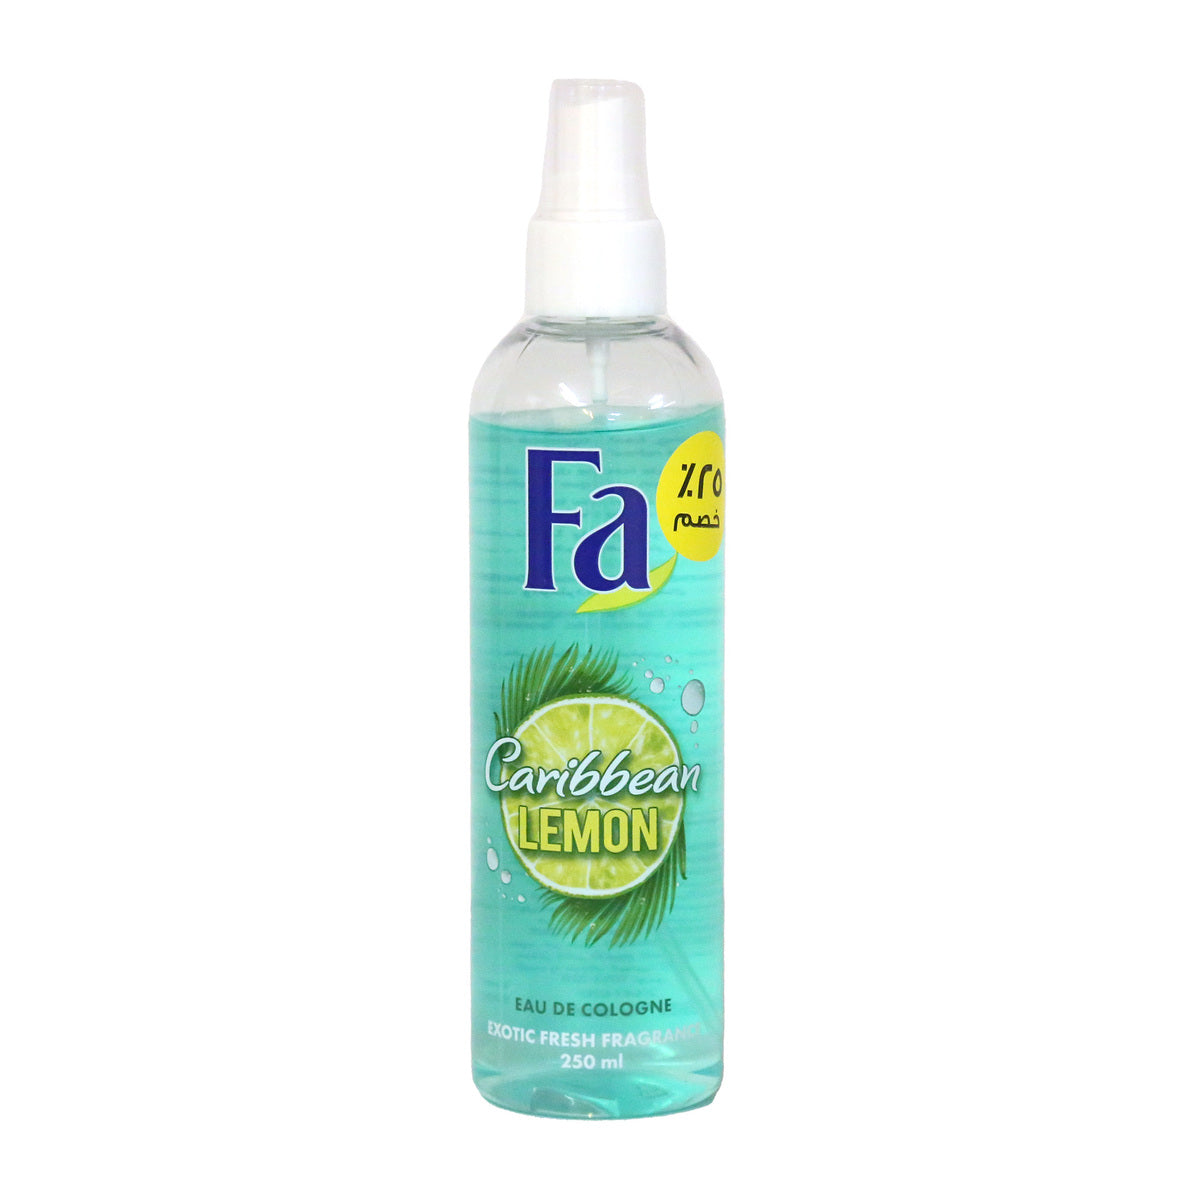 Fa Caribbean Lemon Eau De Cologne Body Splash For Women, 250 ml